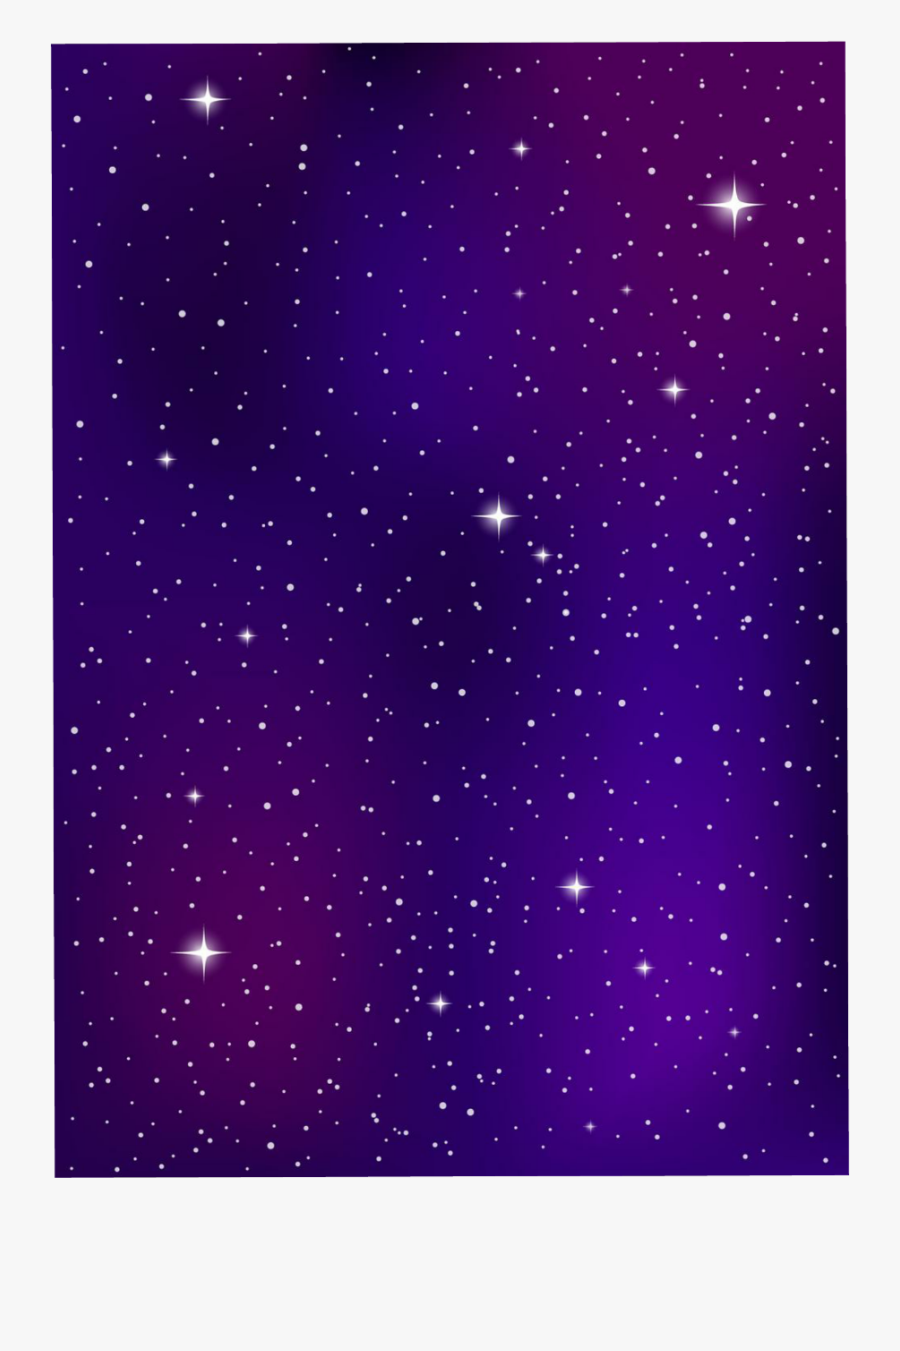 #stars #background #purple #night #sky #starry - Galaxy, Transparent Clipart